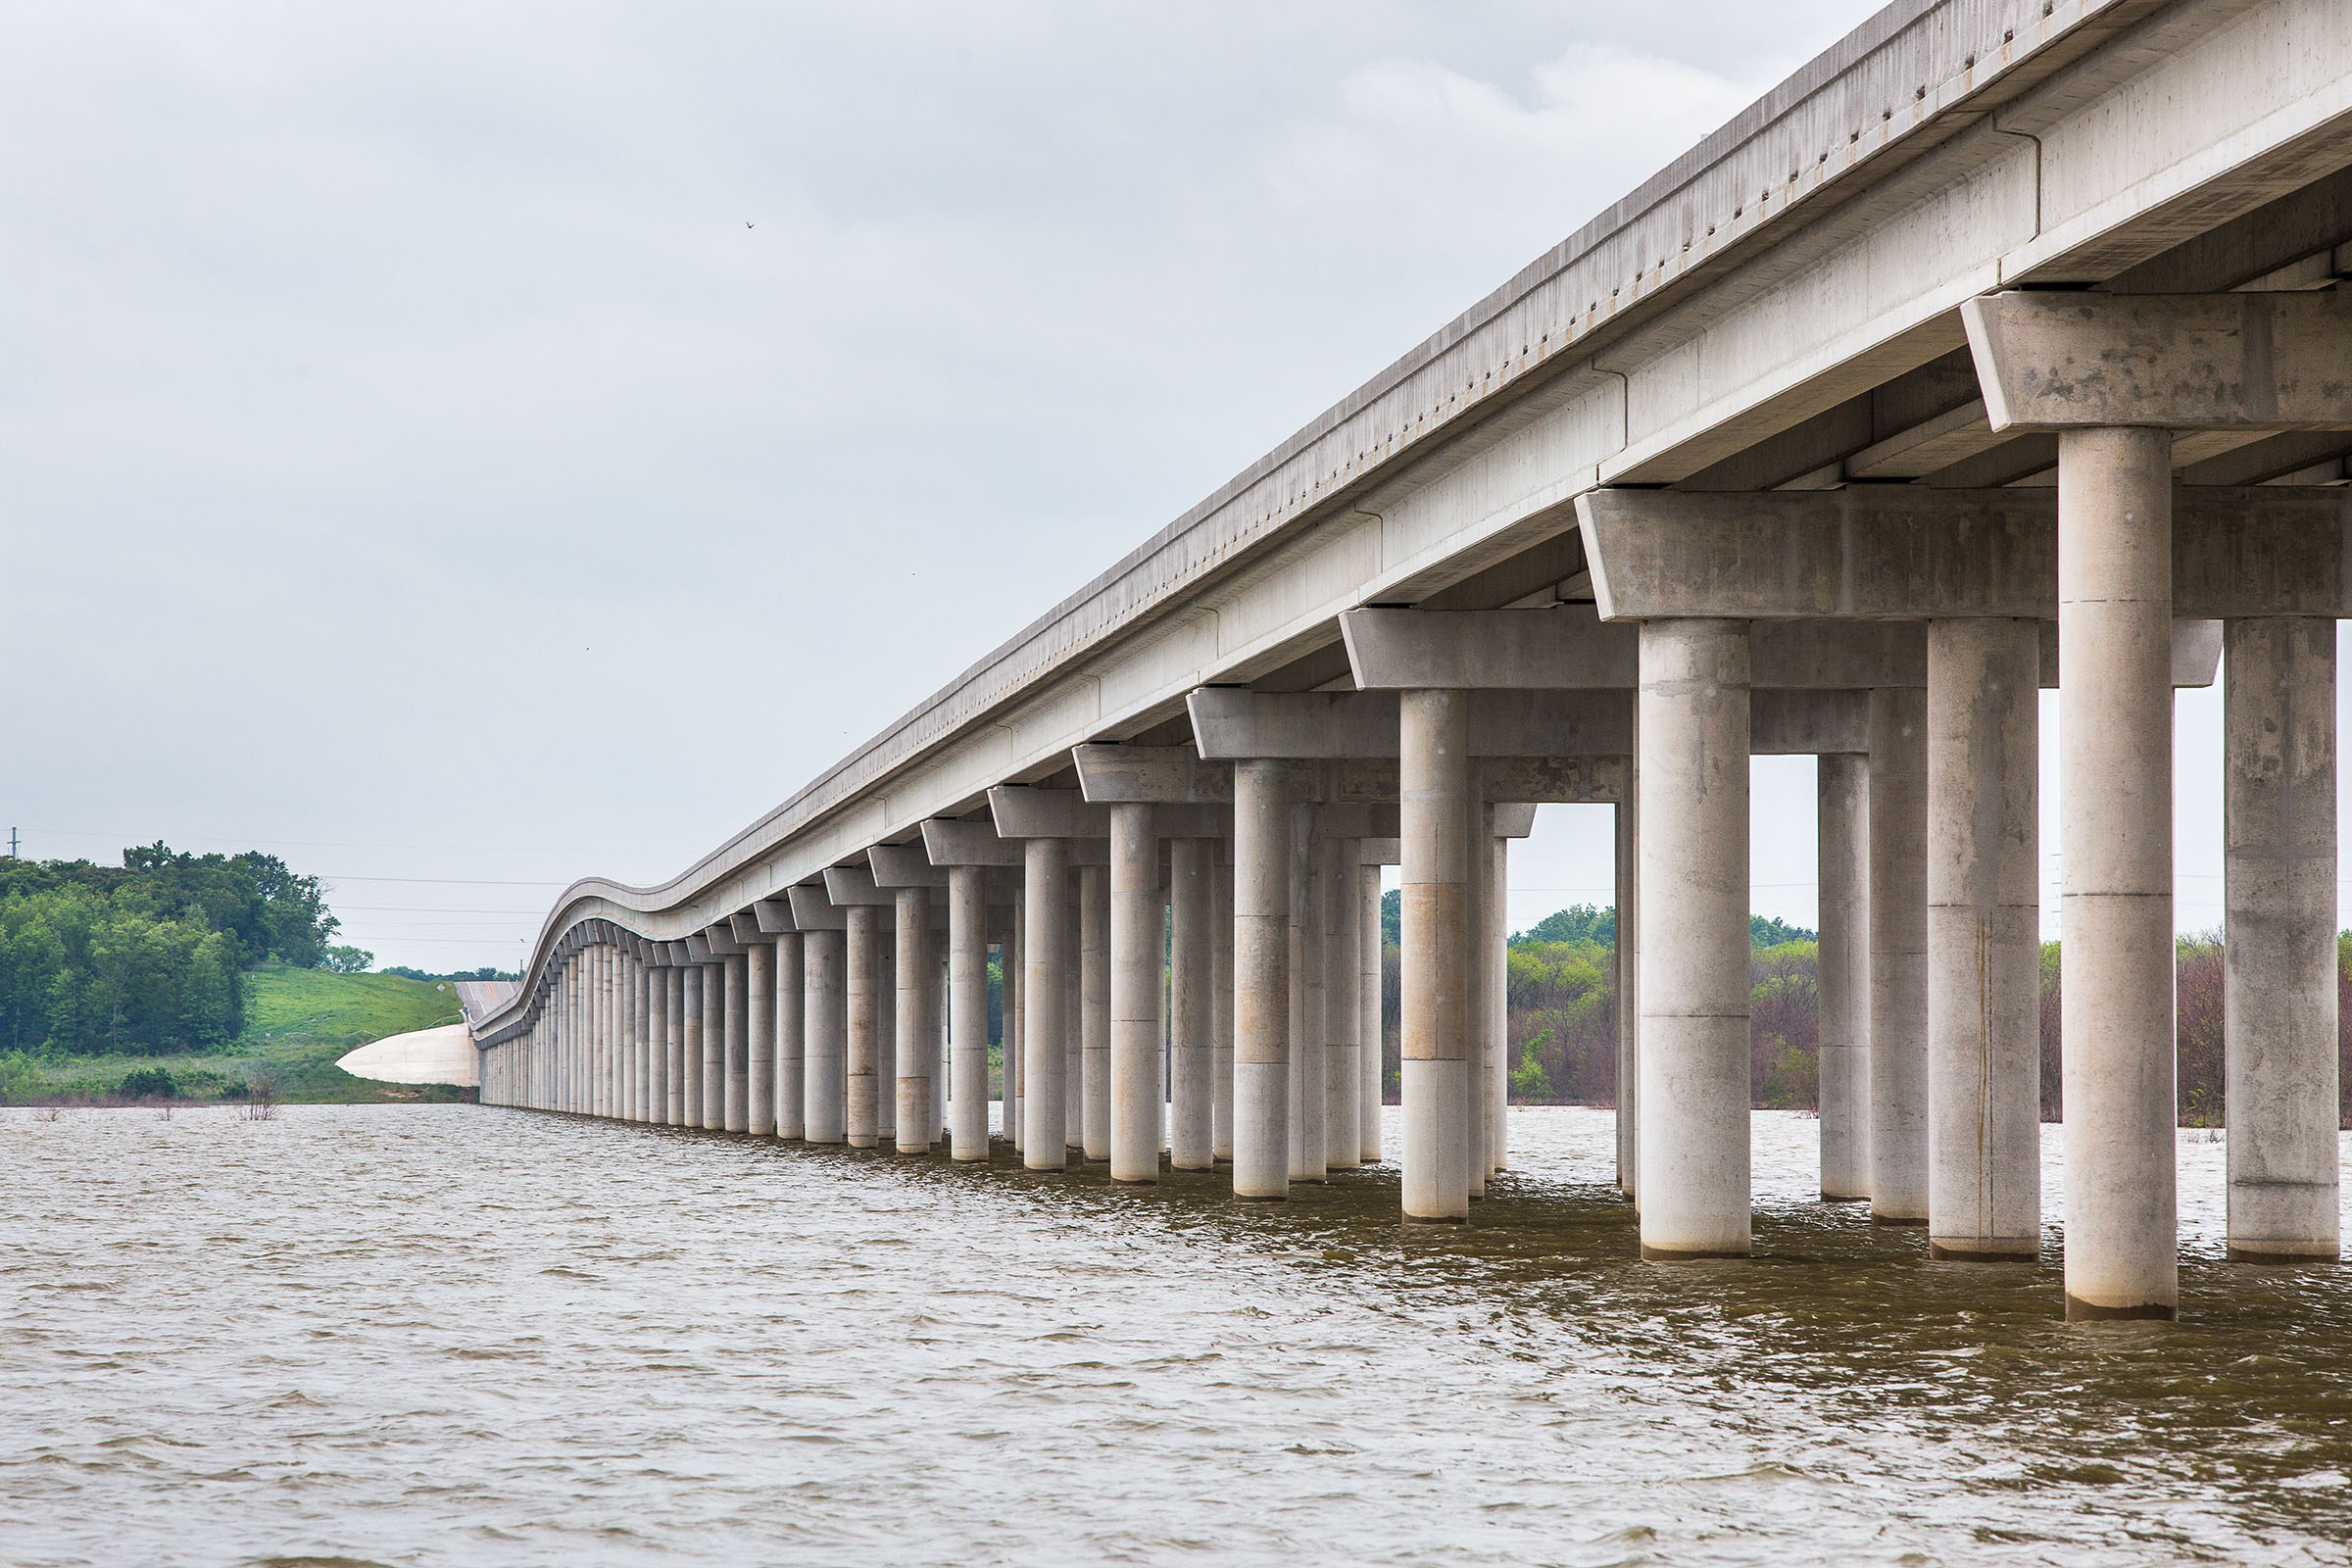 A large concrete bridge spans over grayish water under gray skies